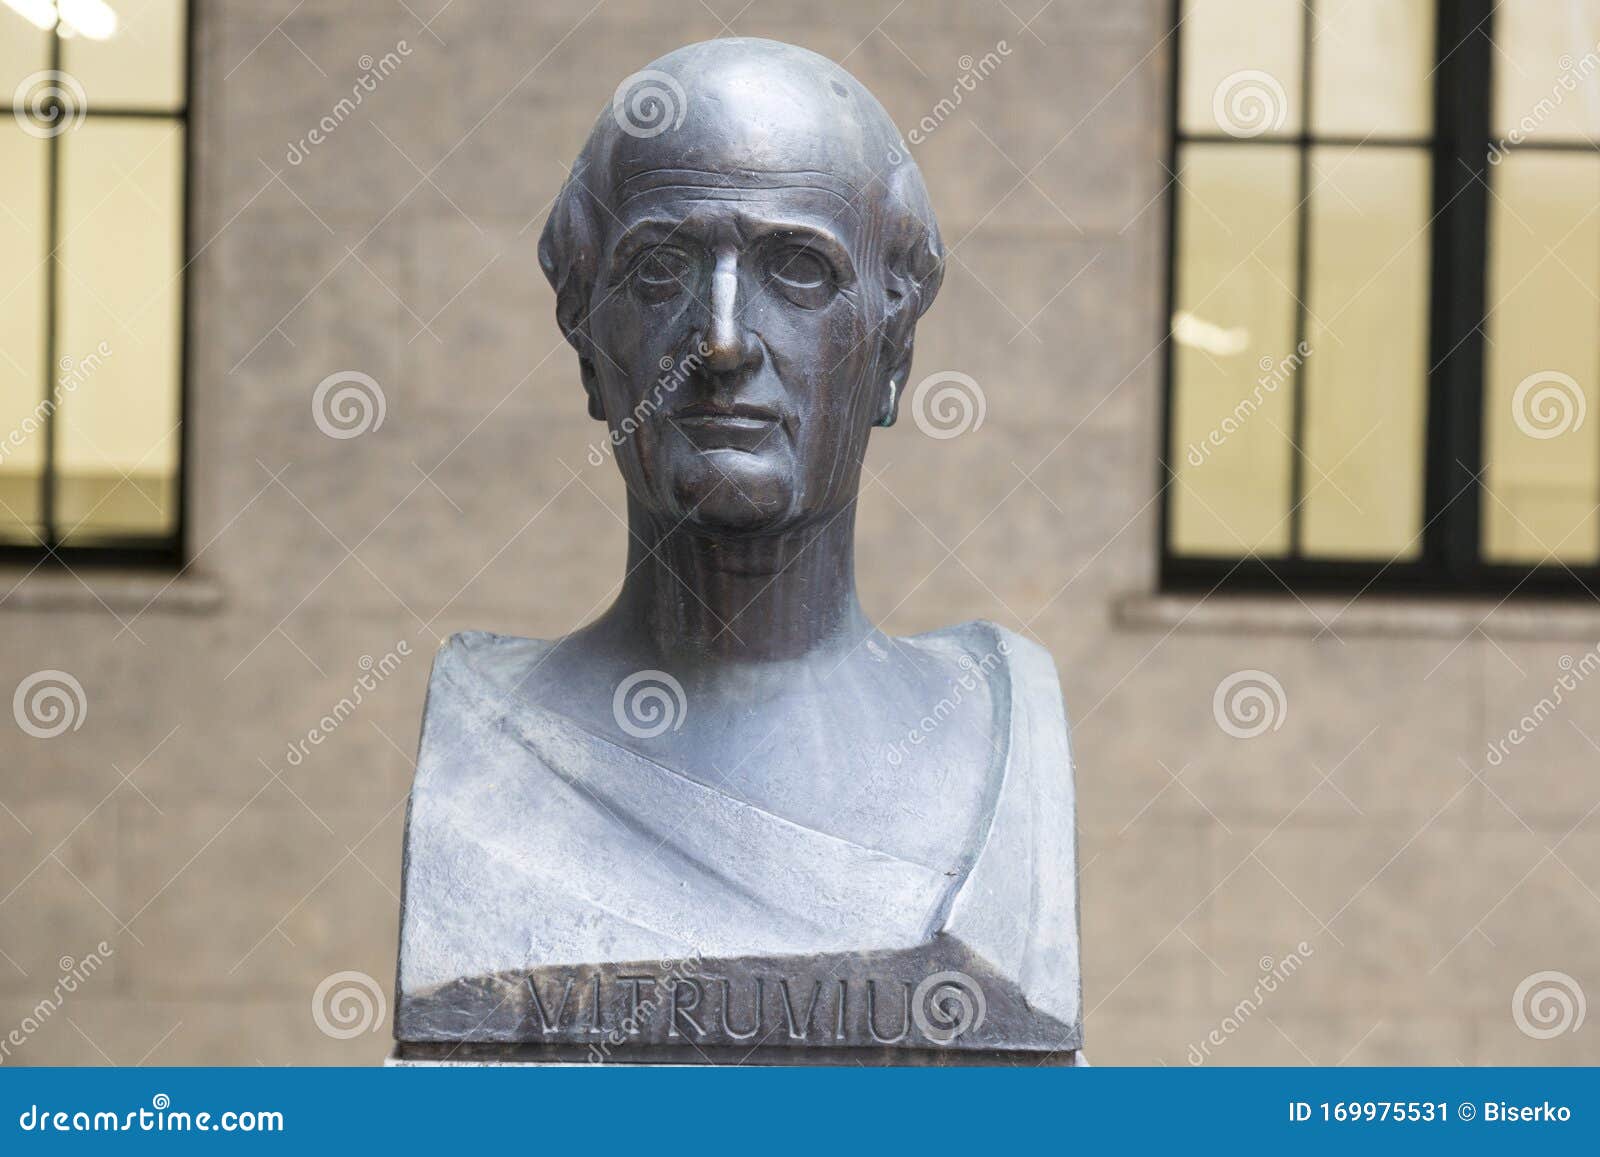 buste of vitruvius